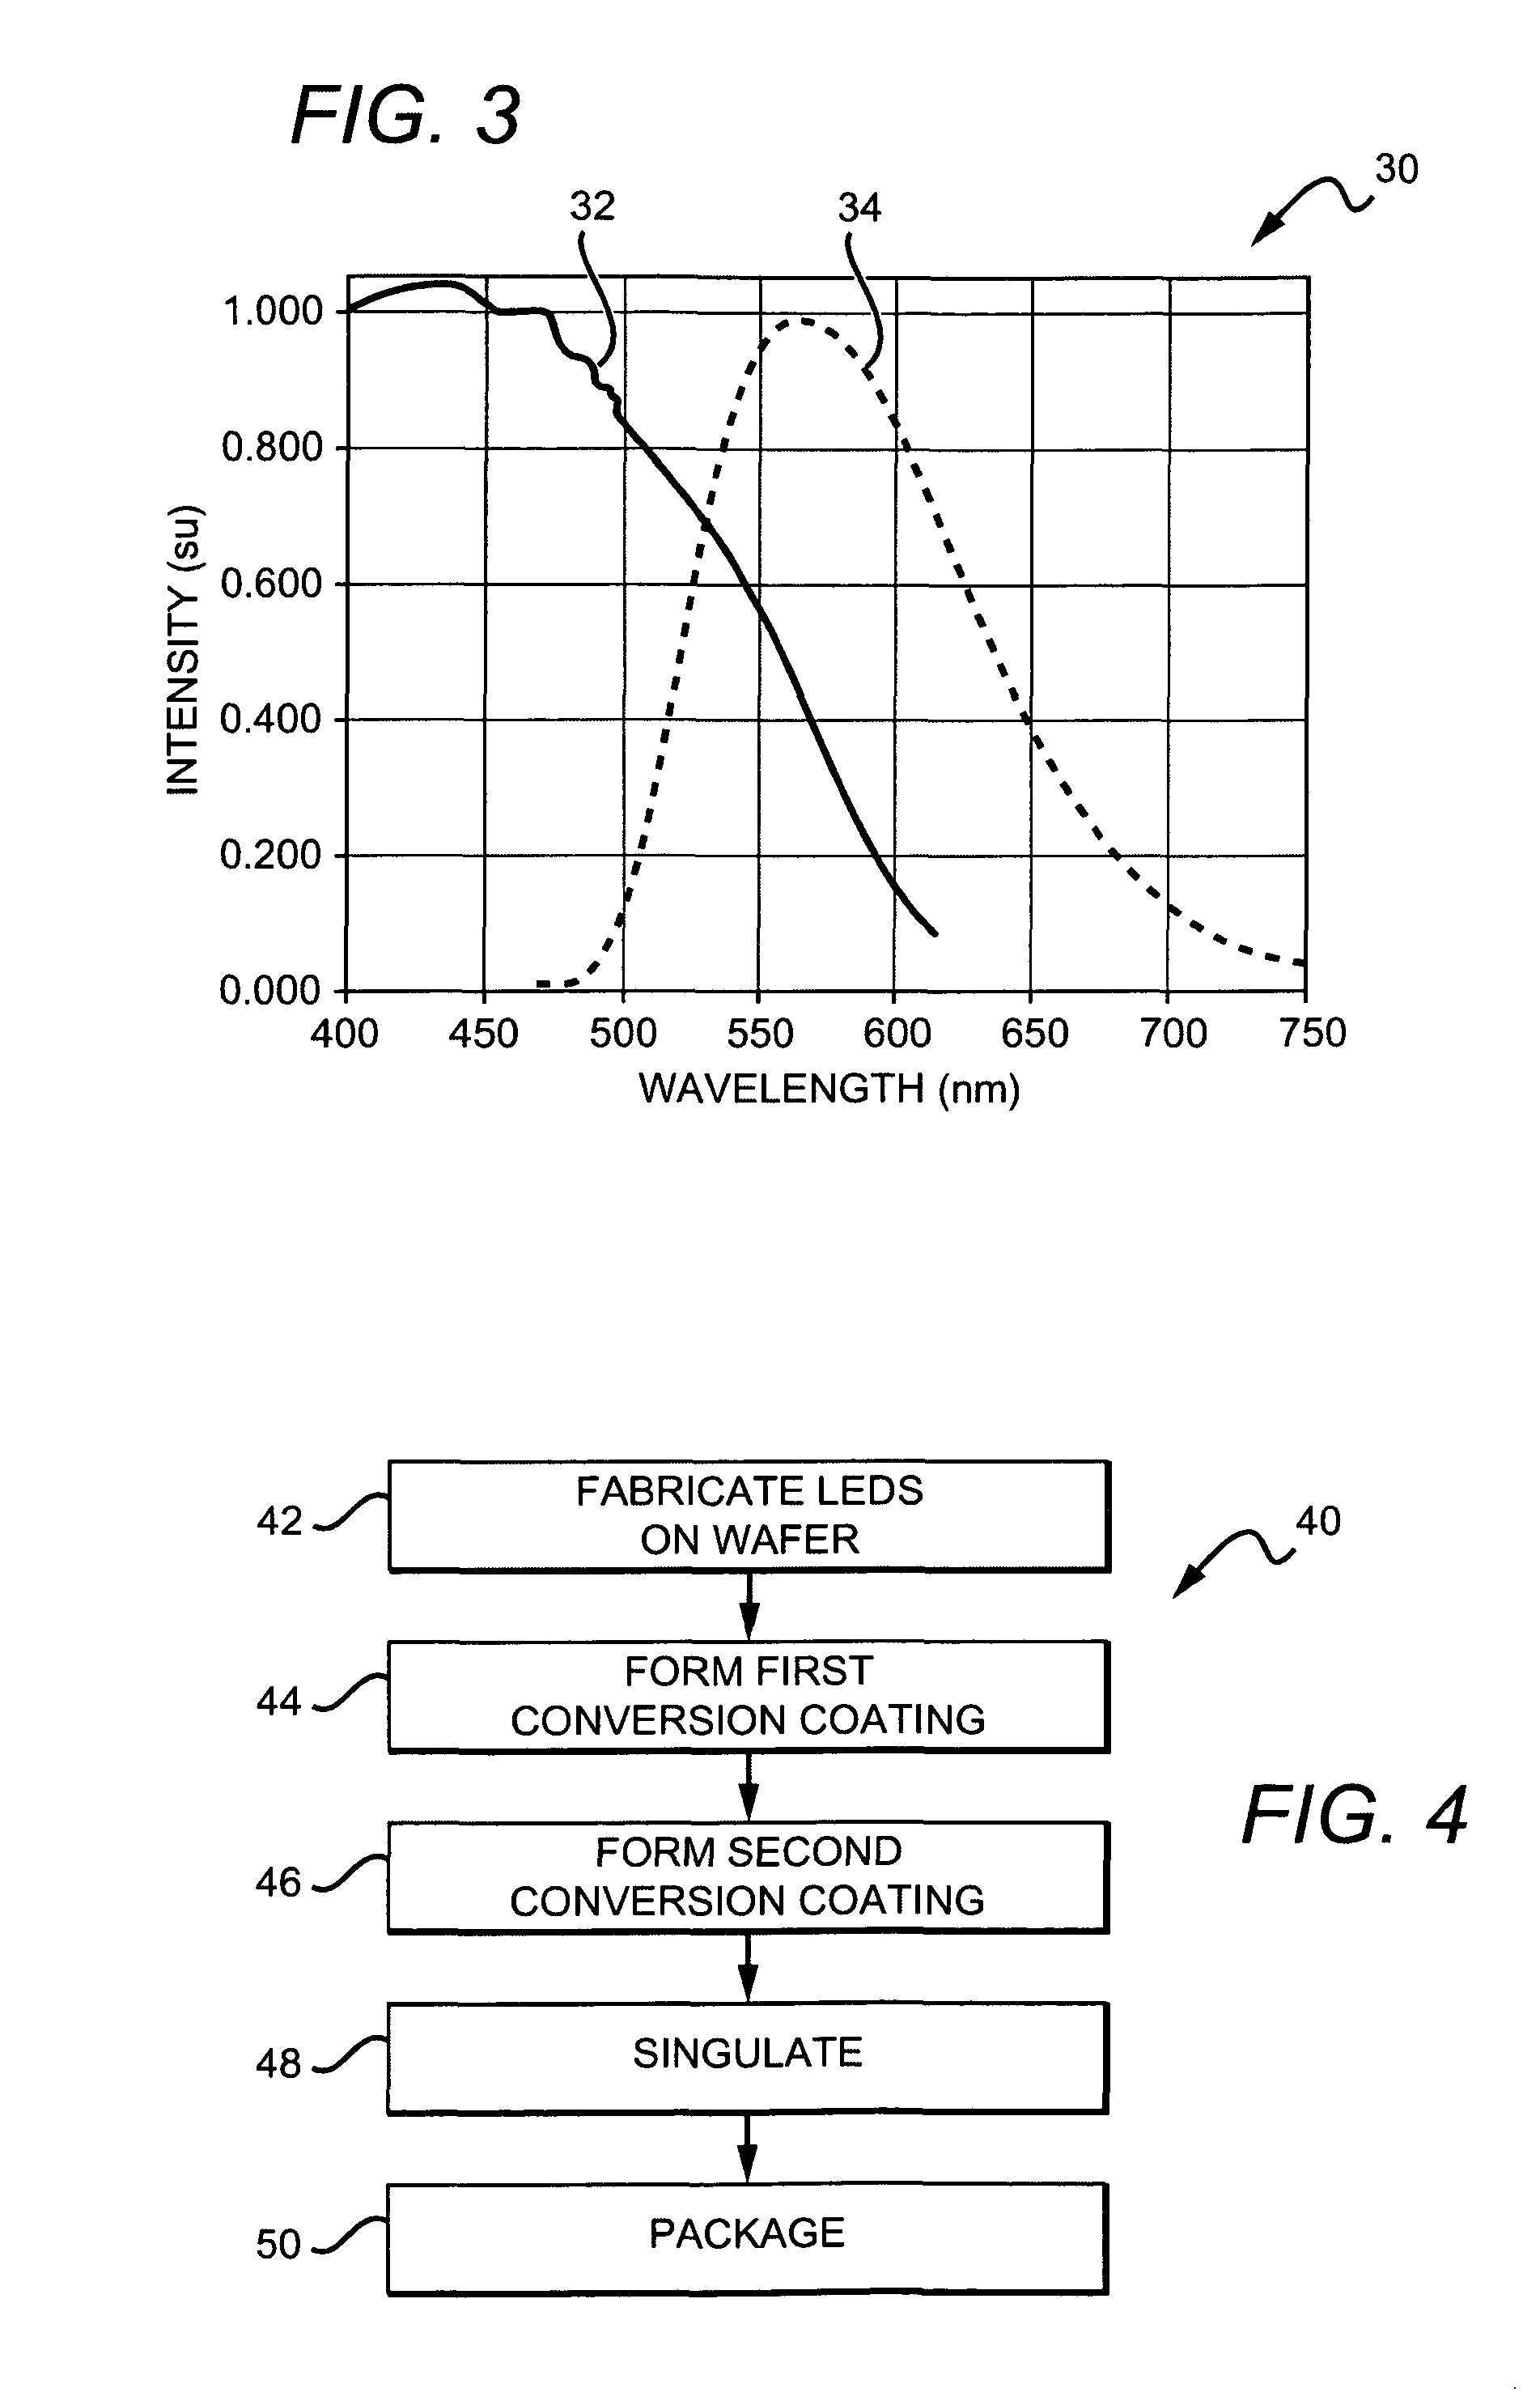 Wafer level phosphor coating technique for warm light emitting diodes